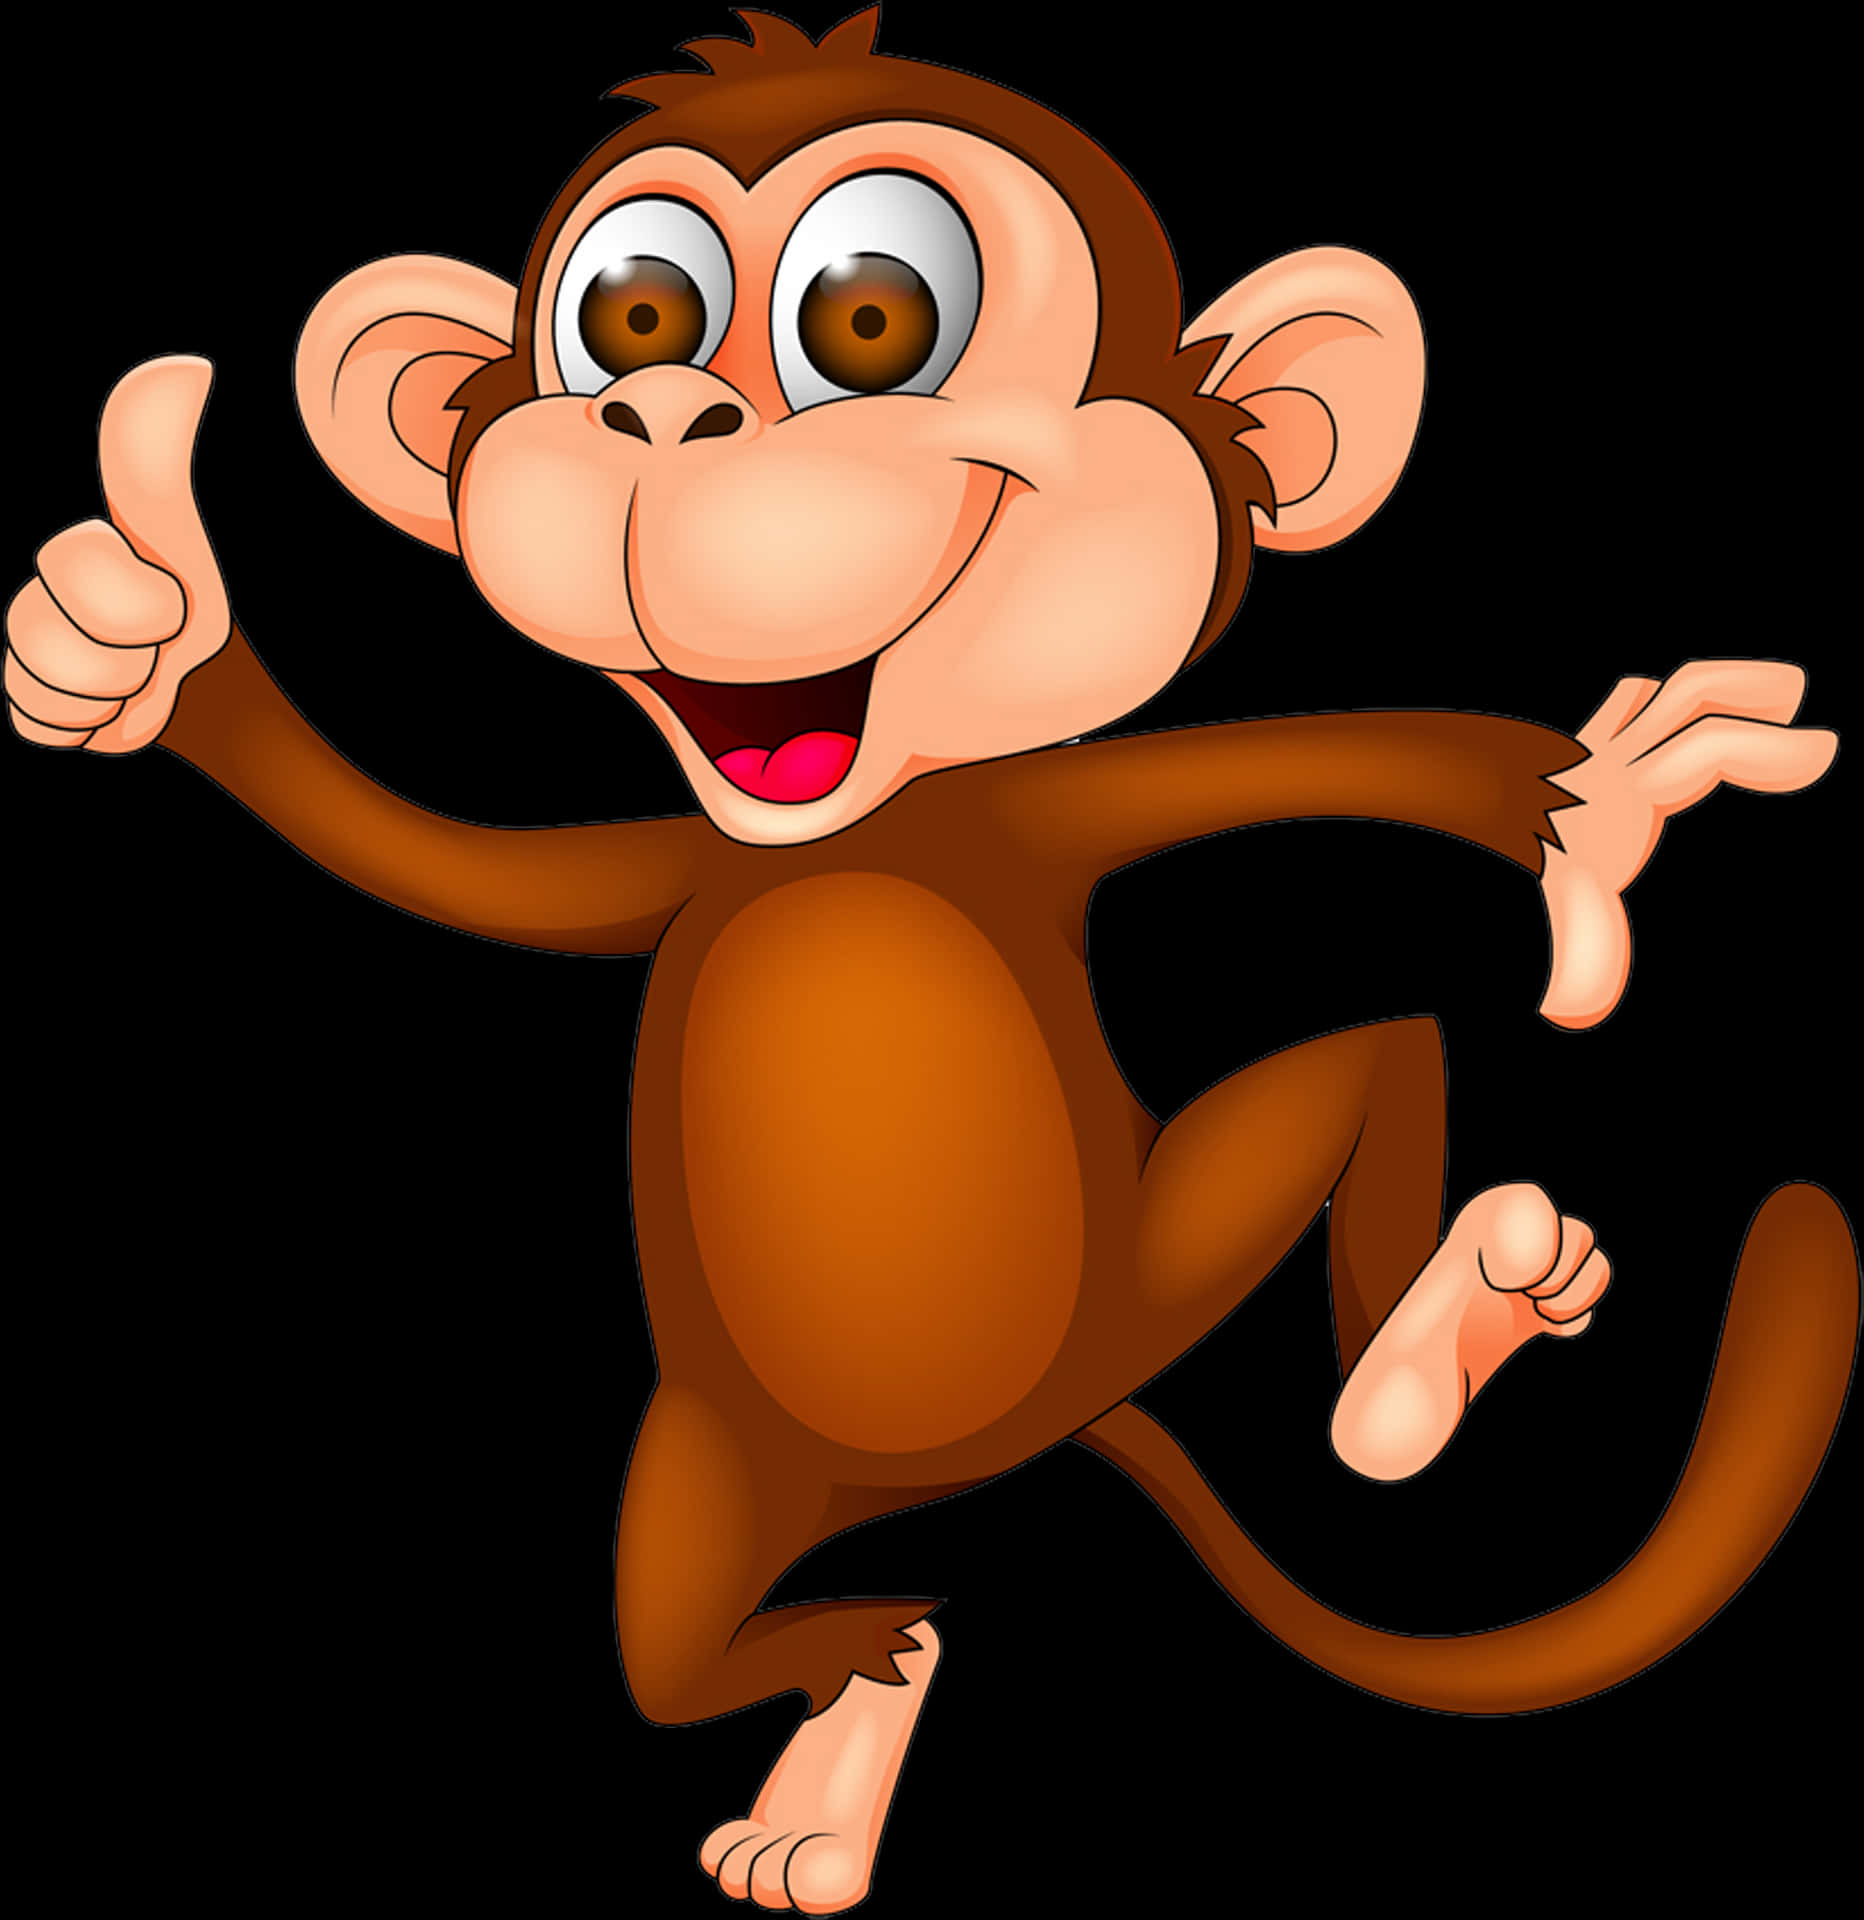 Happy Cartoon Monkey Thumbs Up PNG image